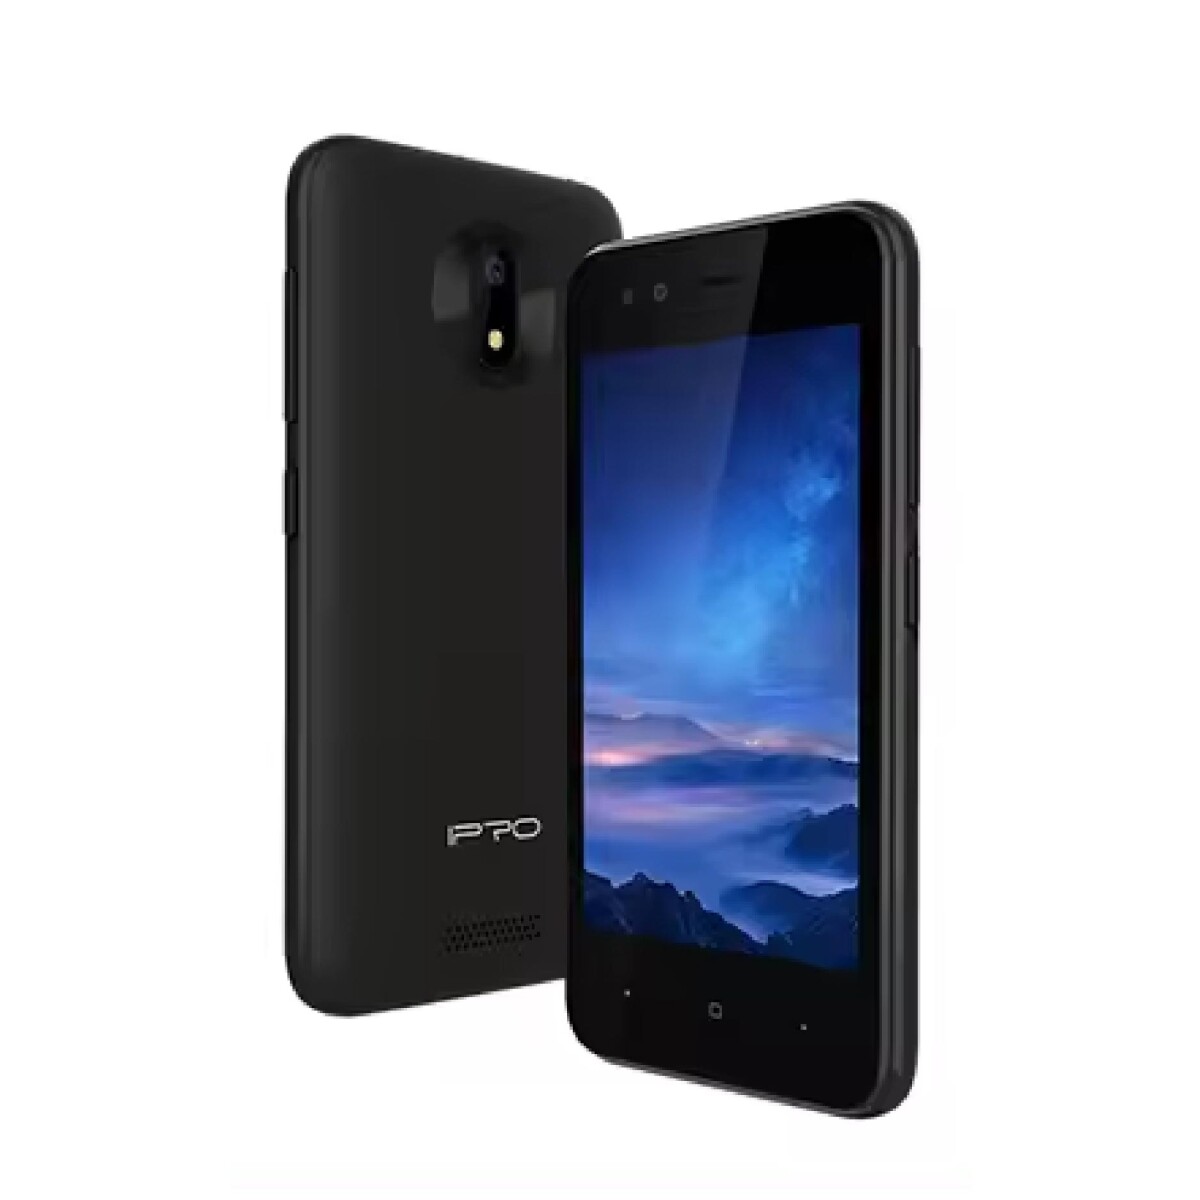 Smartphone Ipro S401 3G Dual Sim Libre - NEGRO 